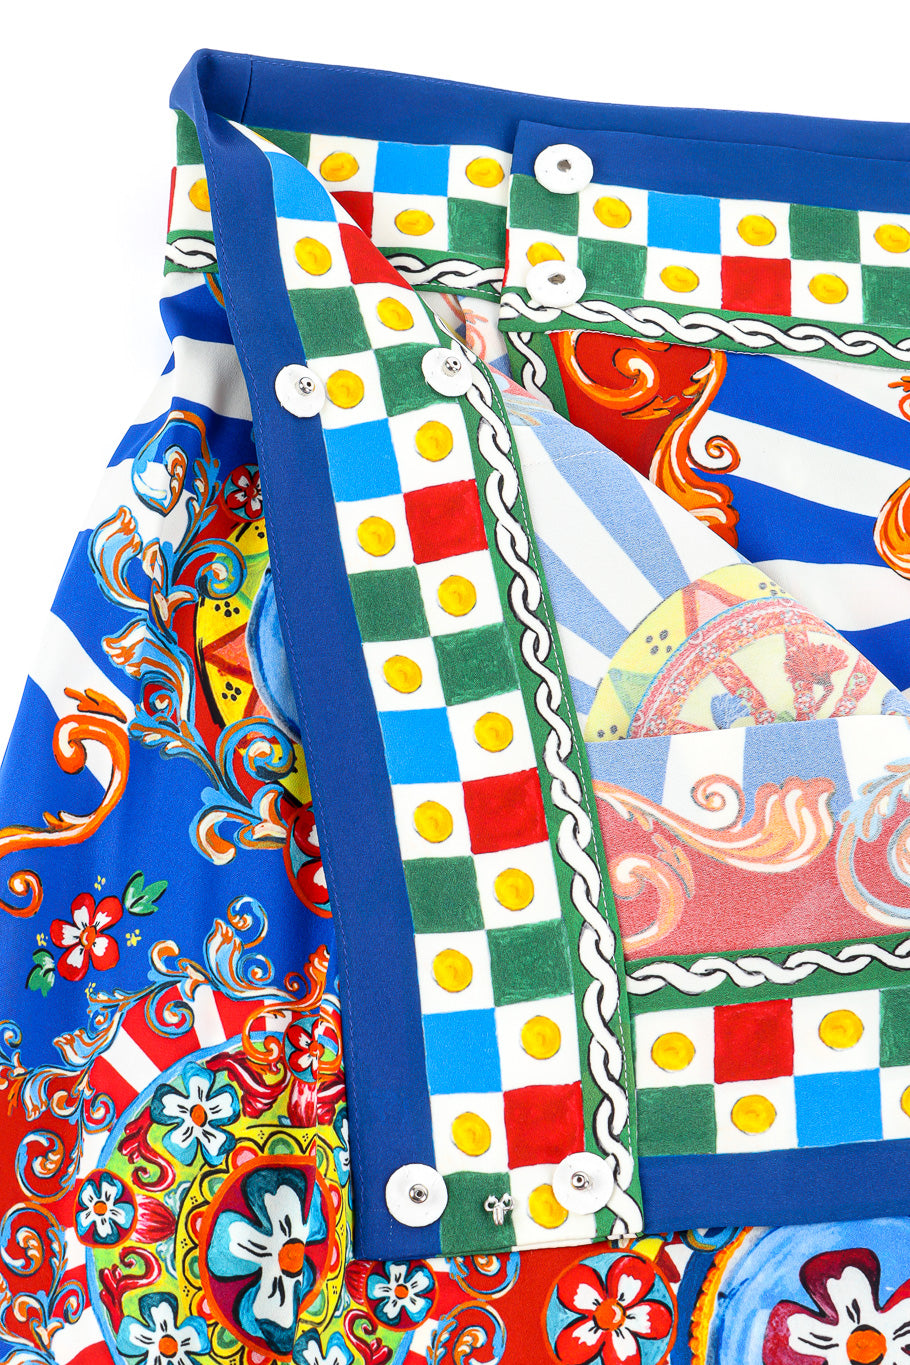 Dolce & Gabbana multicolor printed skirt snap button details @recessla